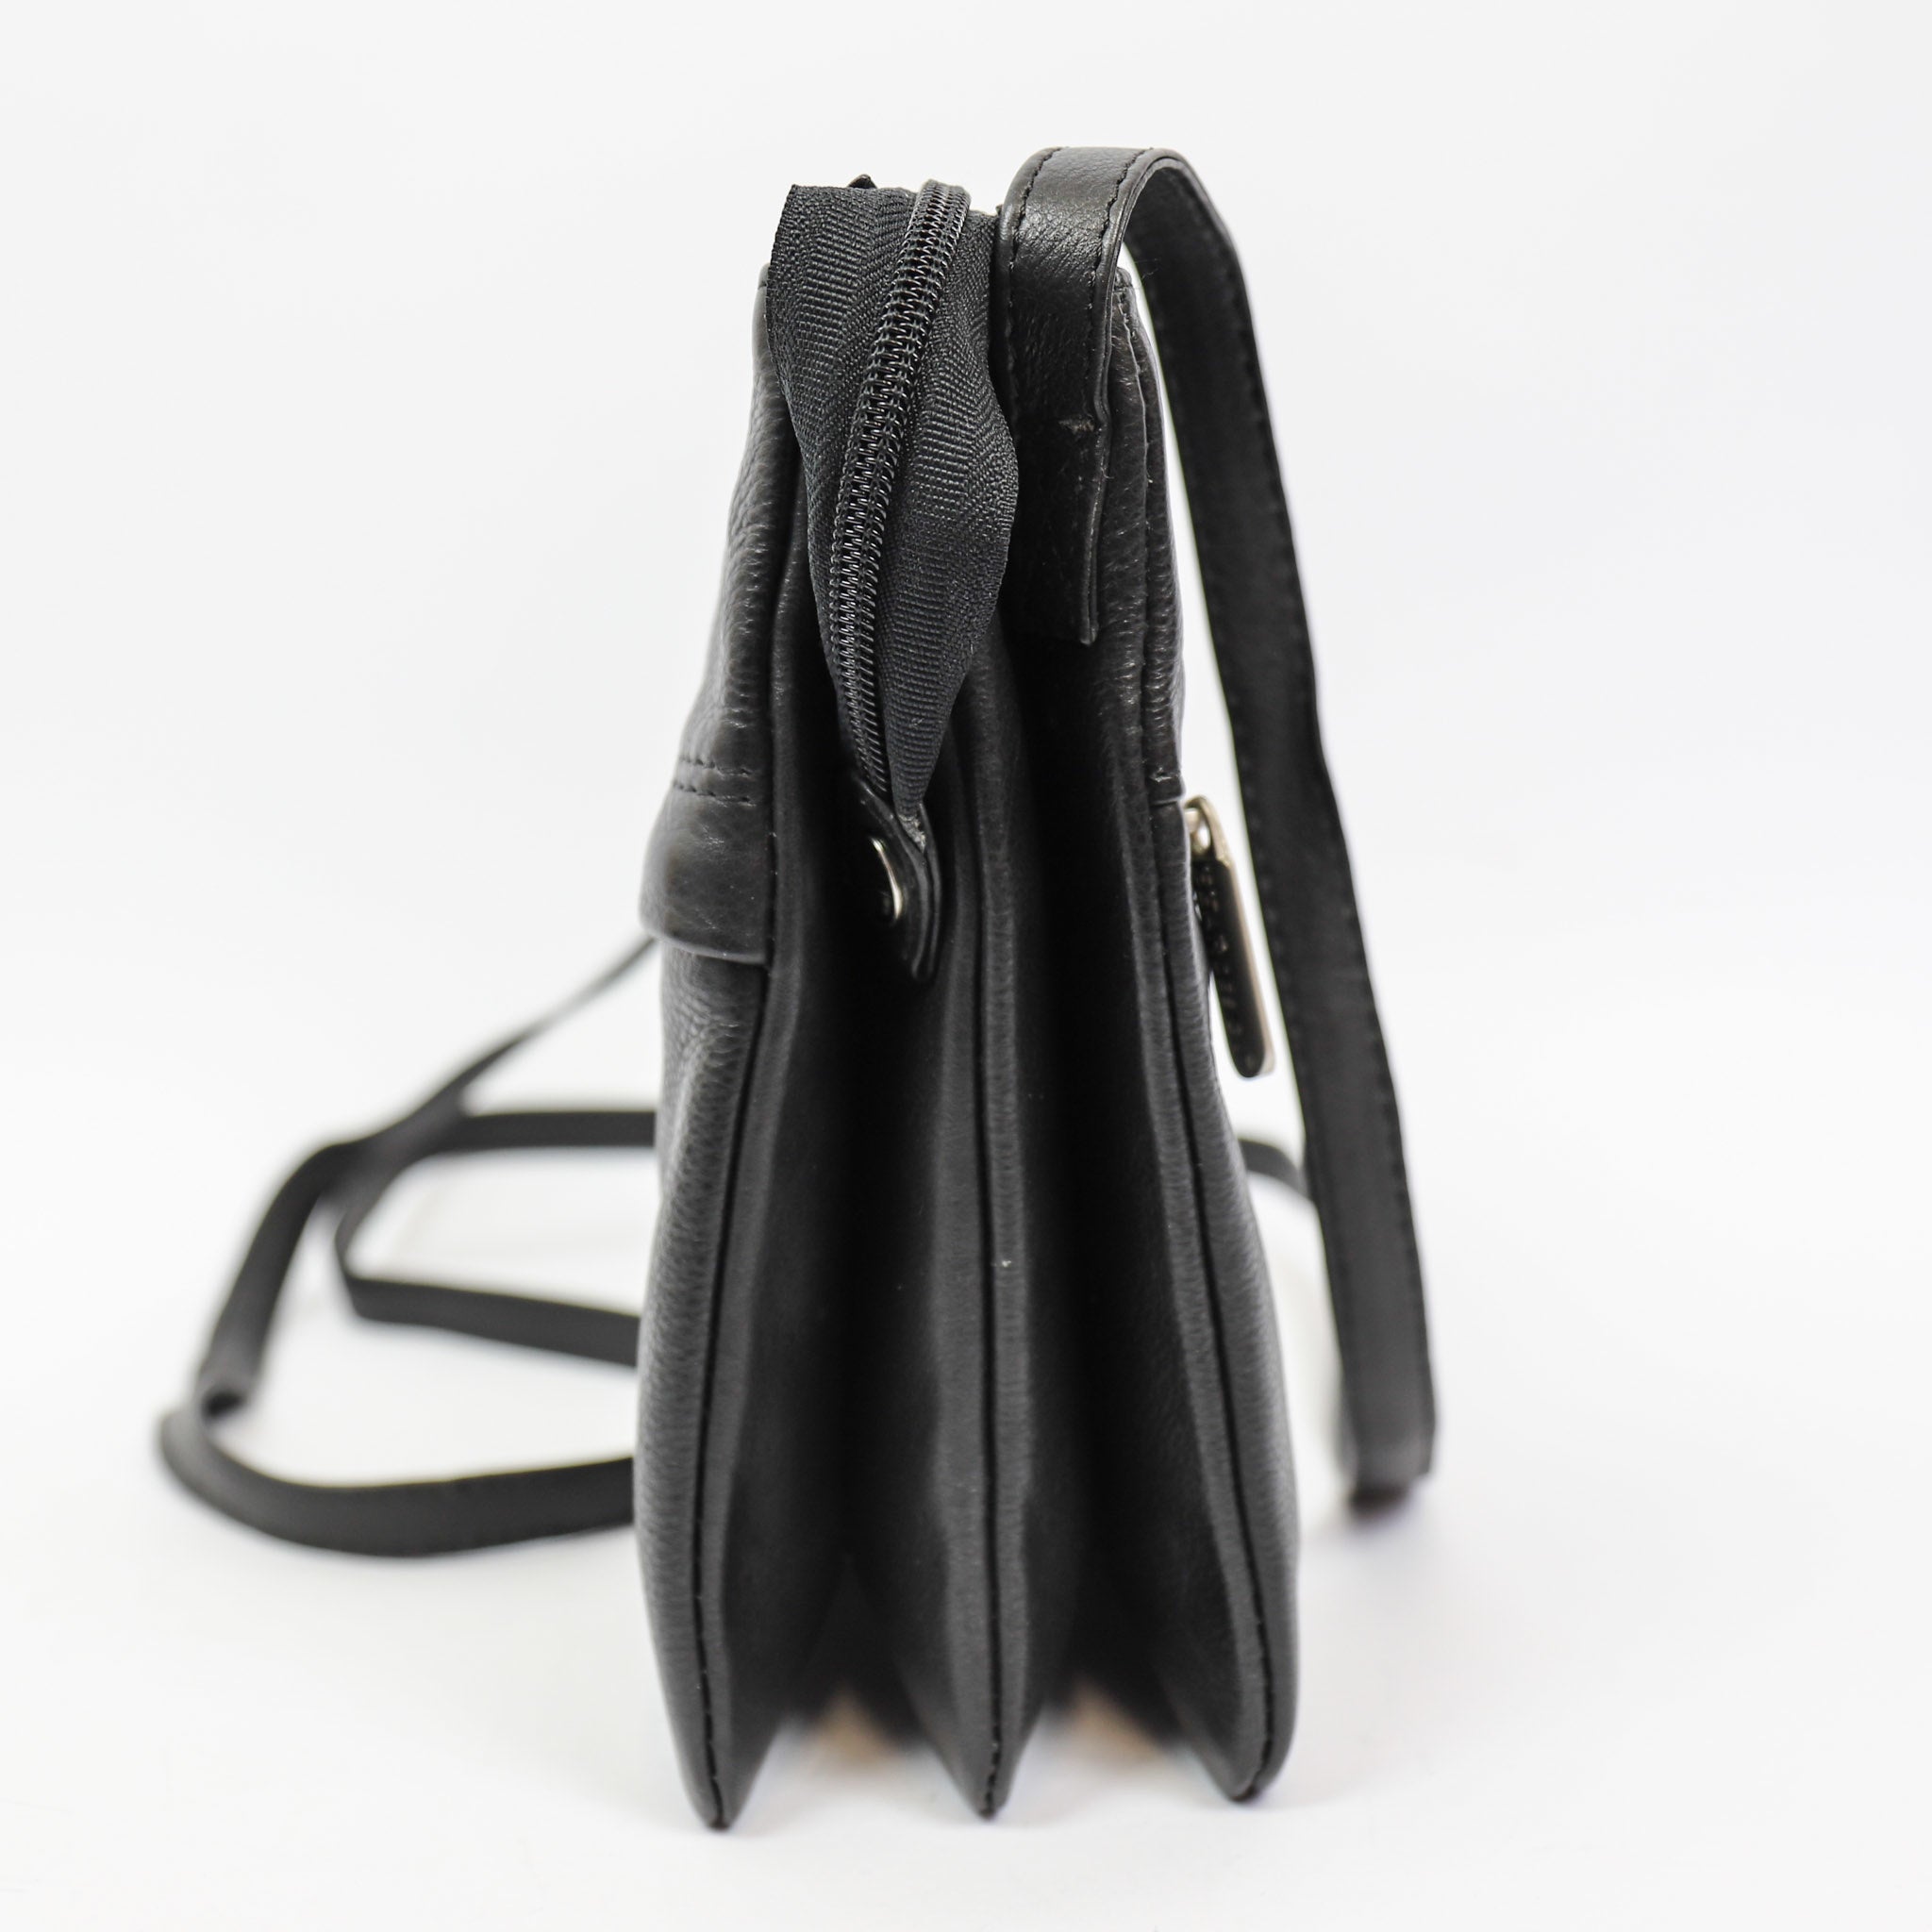 Shoulder bag 'Ellen' black - B 6000